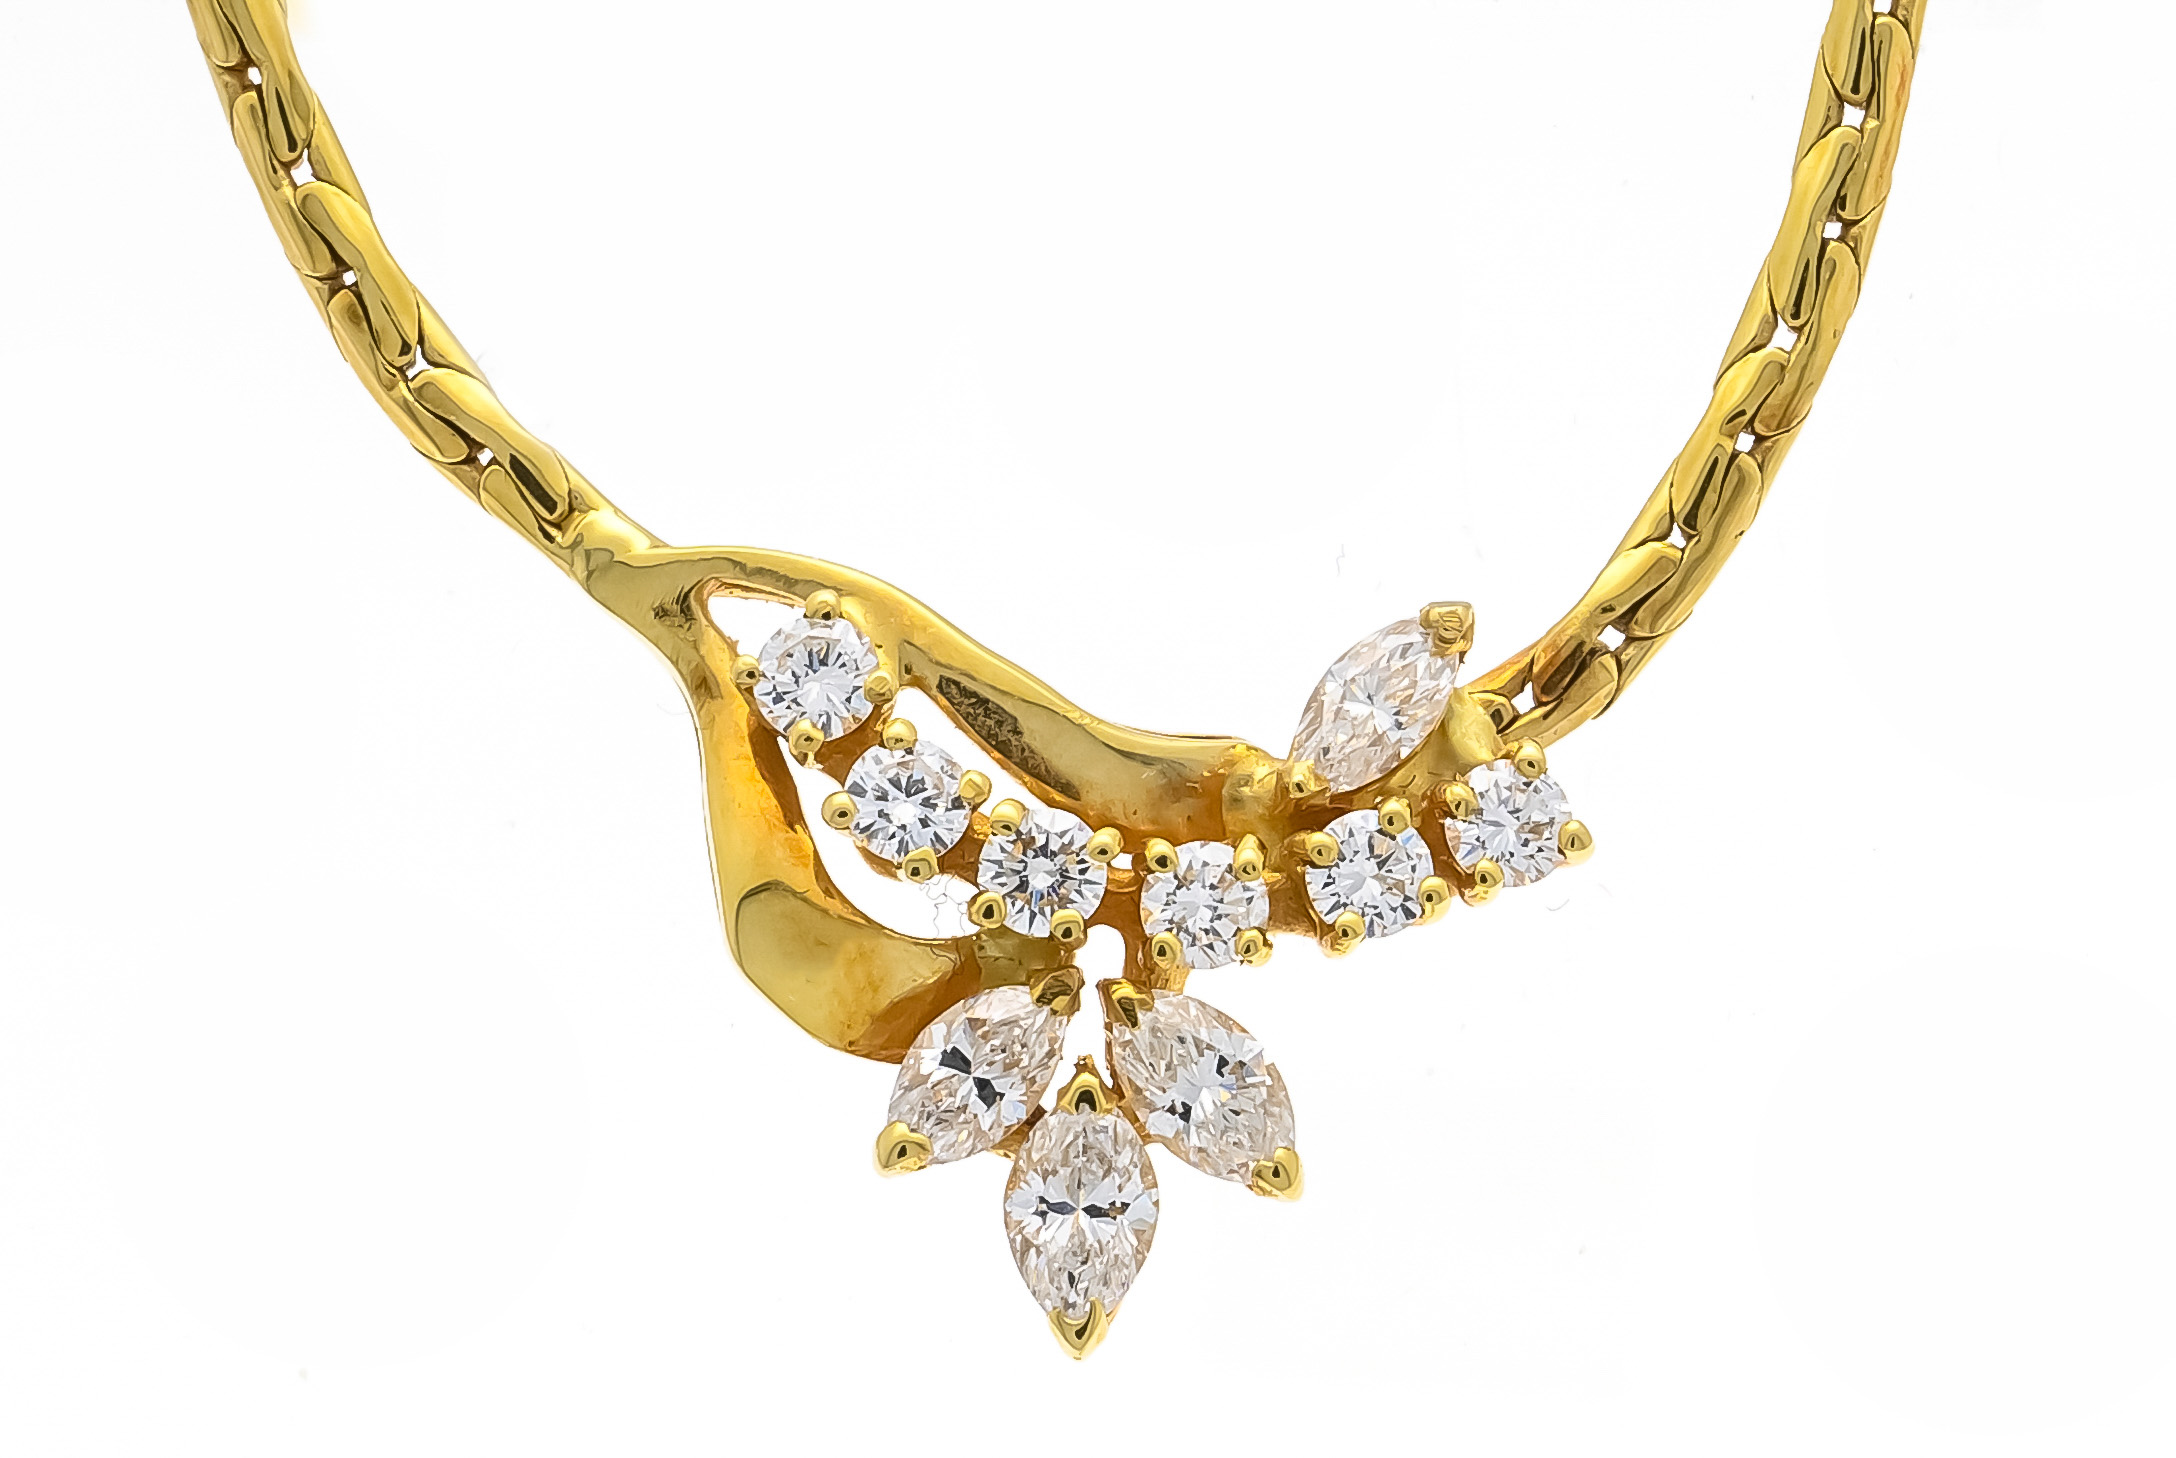 Brilliant centerpiece necklace GG 750/000 with 4 diamond navettes and 6 brilliant-cut diamonds,